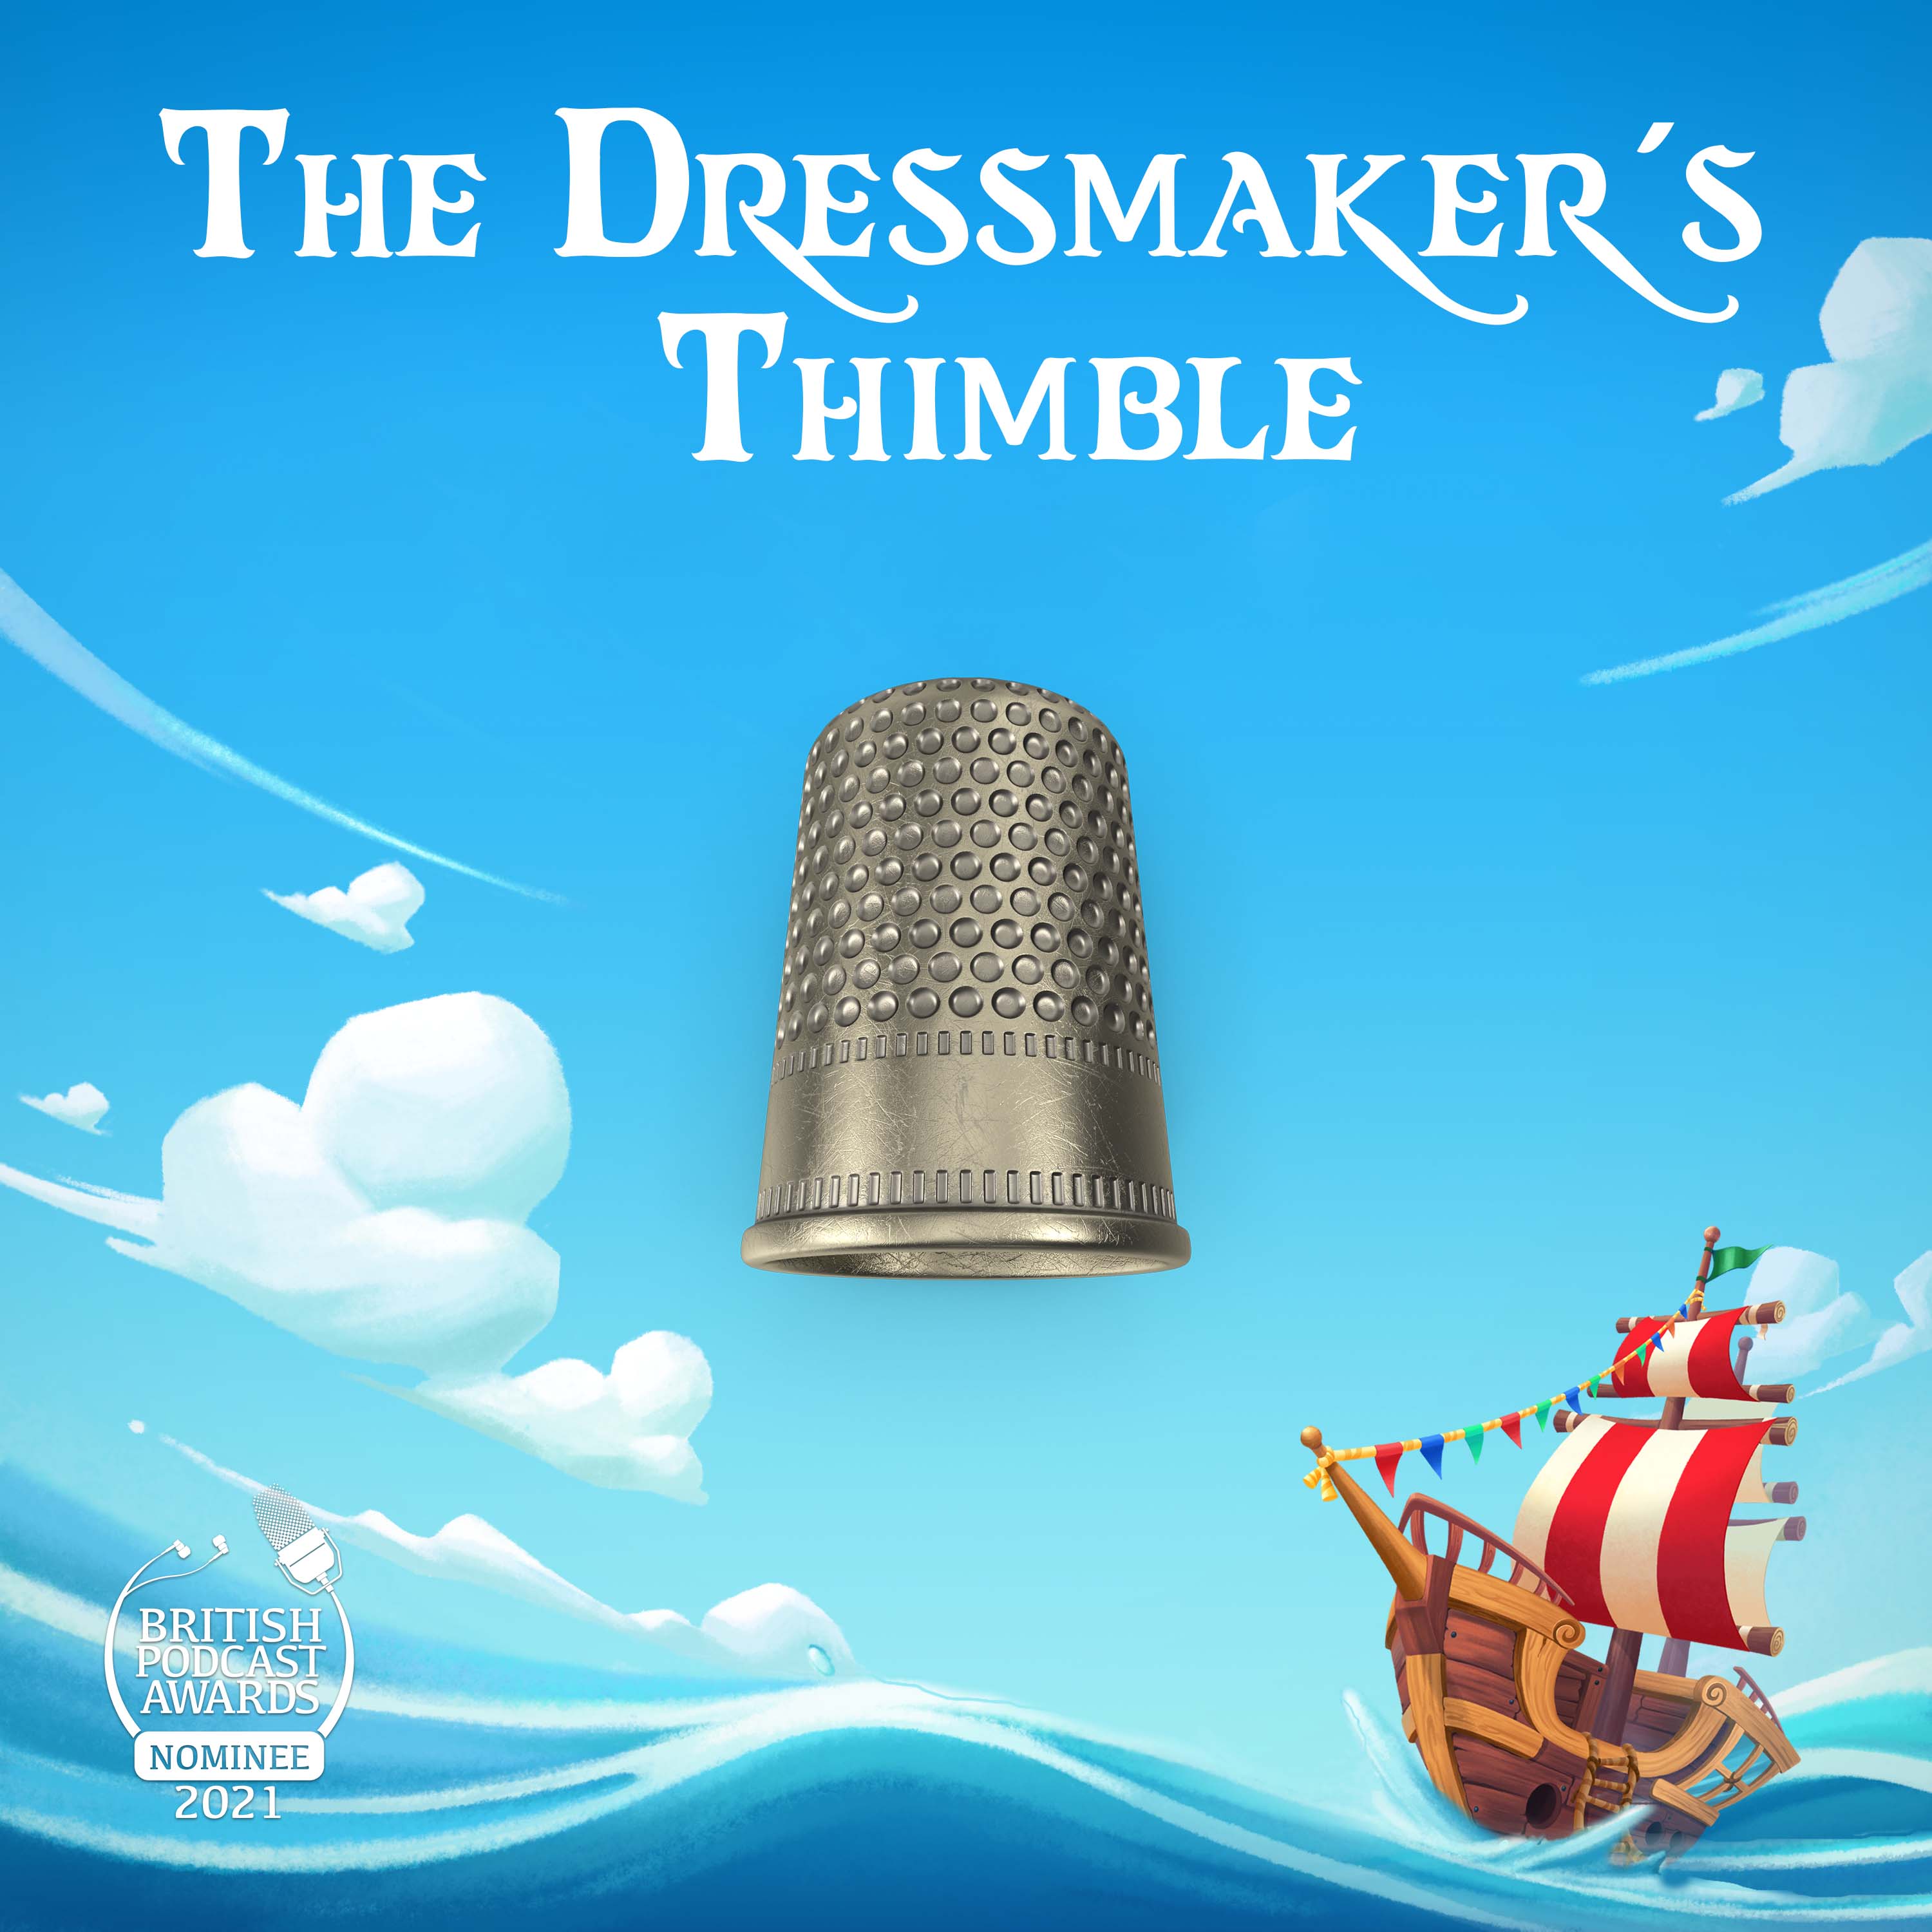 The Dressmaker’s Thimble